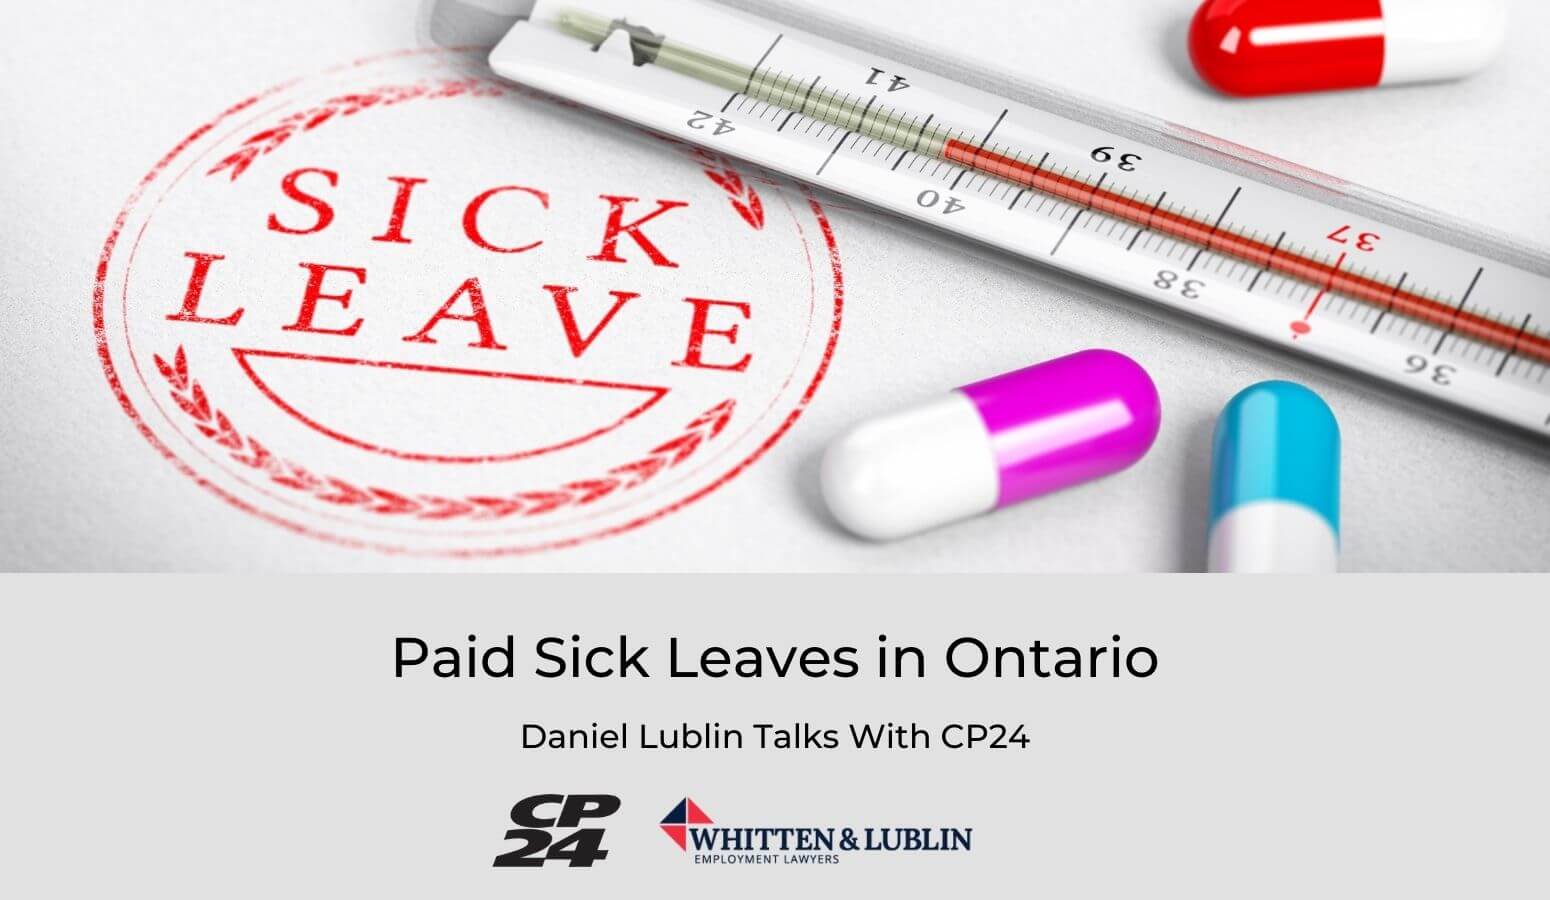 Paid sick leave